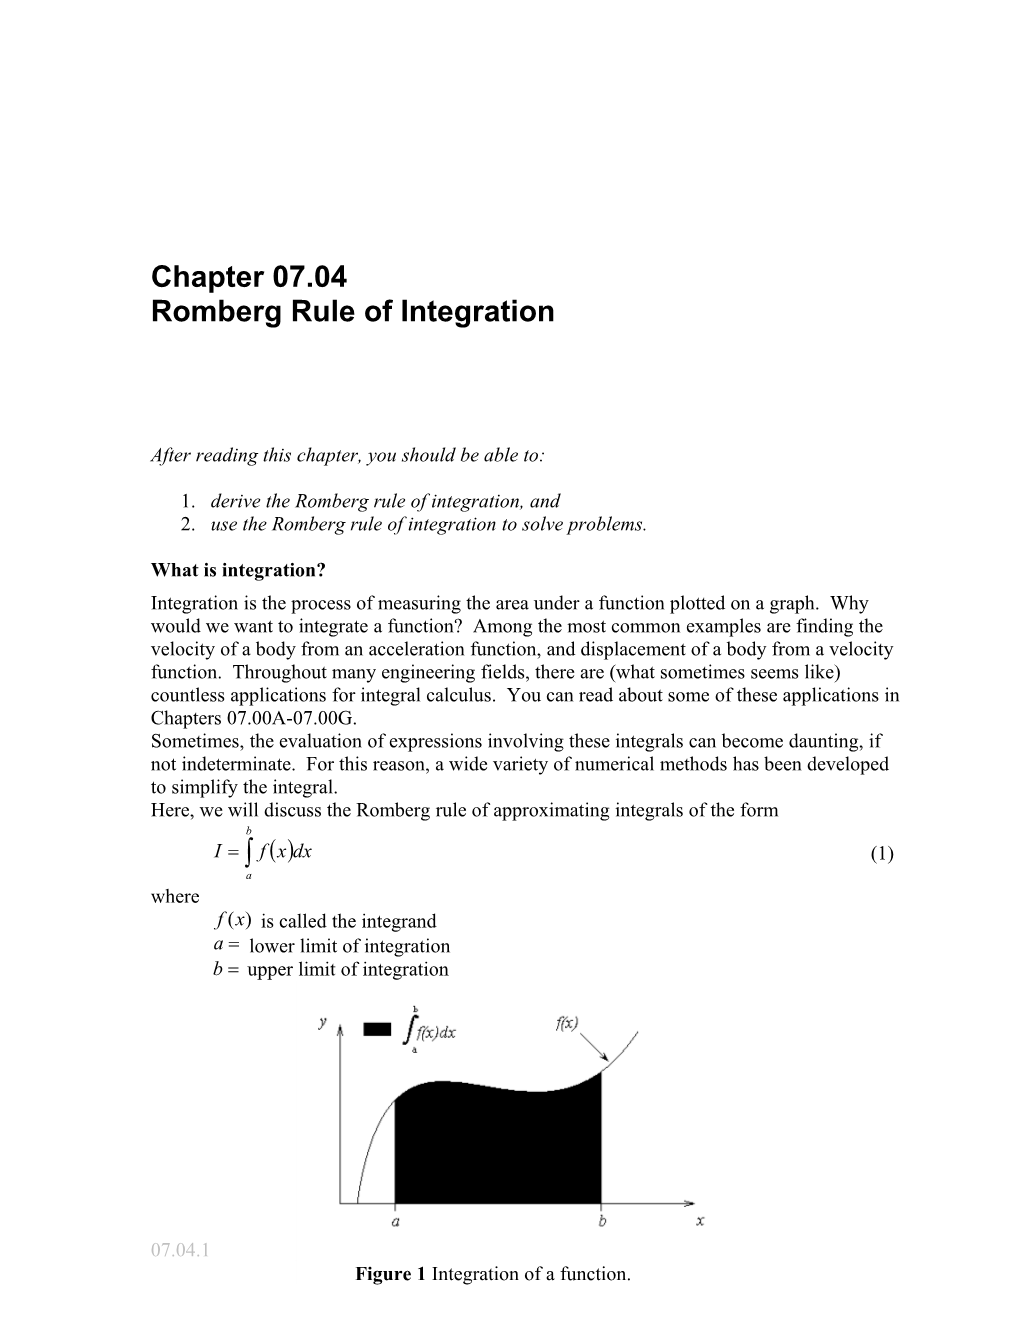 Romberg Rule of Integration: General Engineering s1